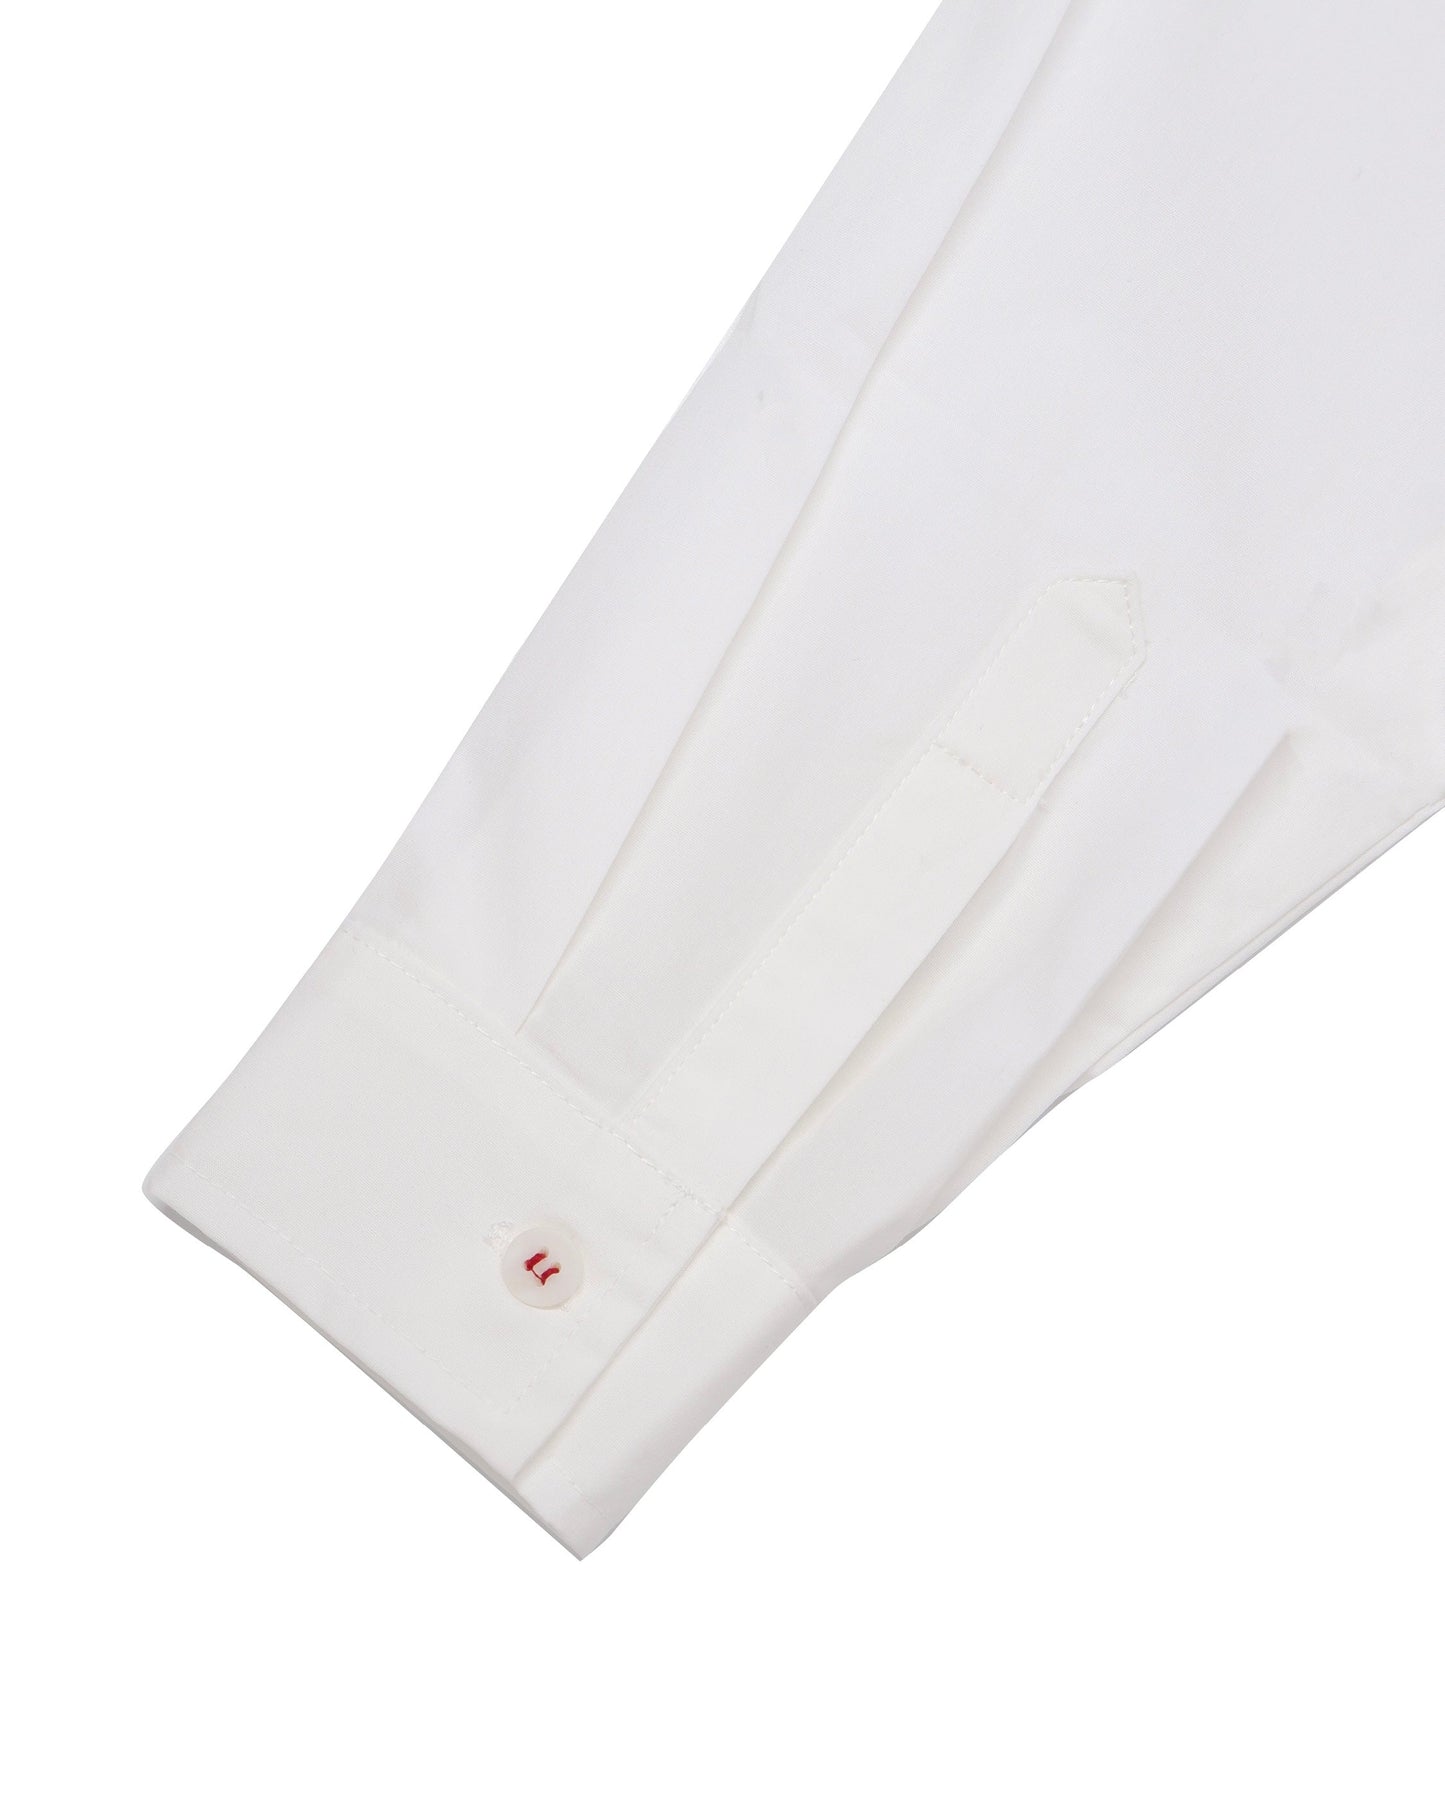 TimTay x Phucisme - FIRE MONSTER - Long sleeves shirt